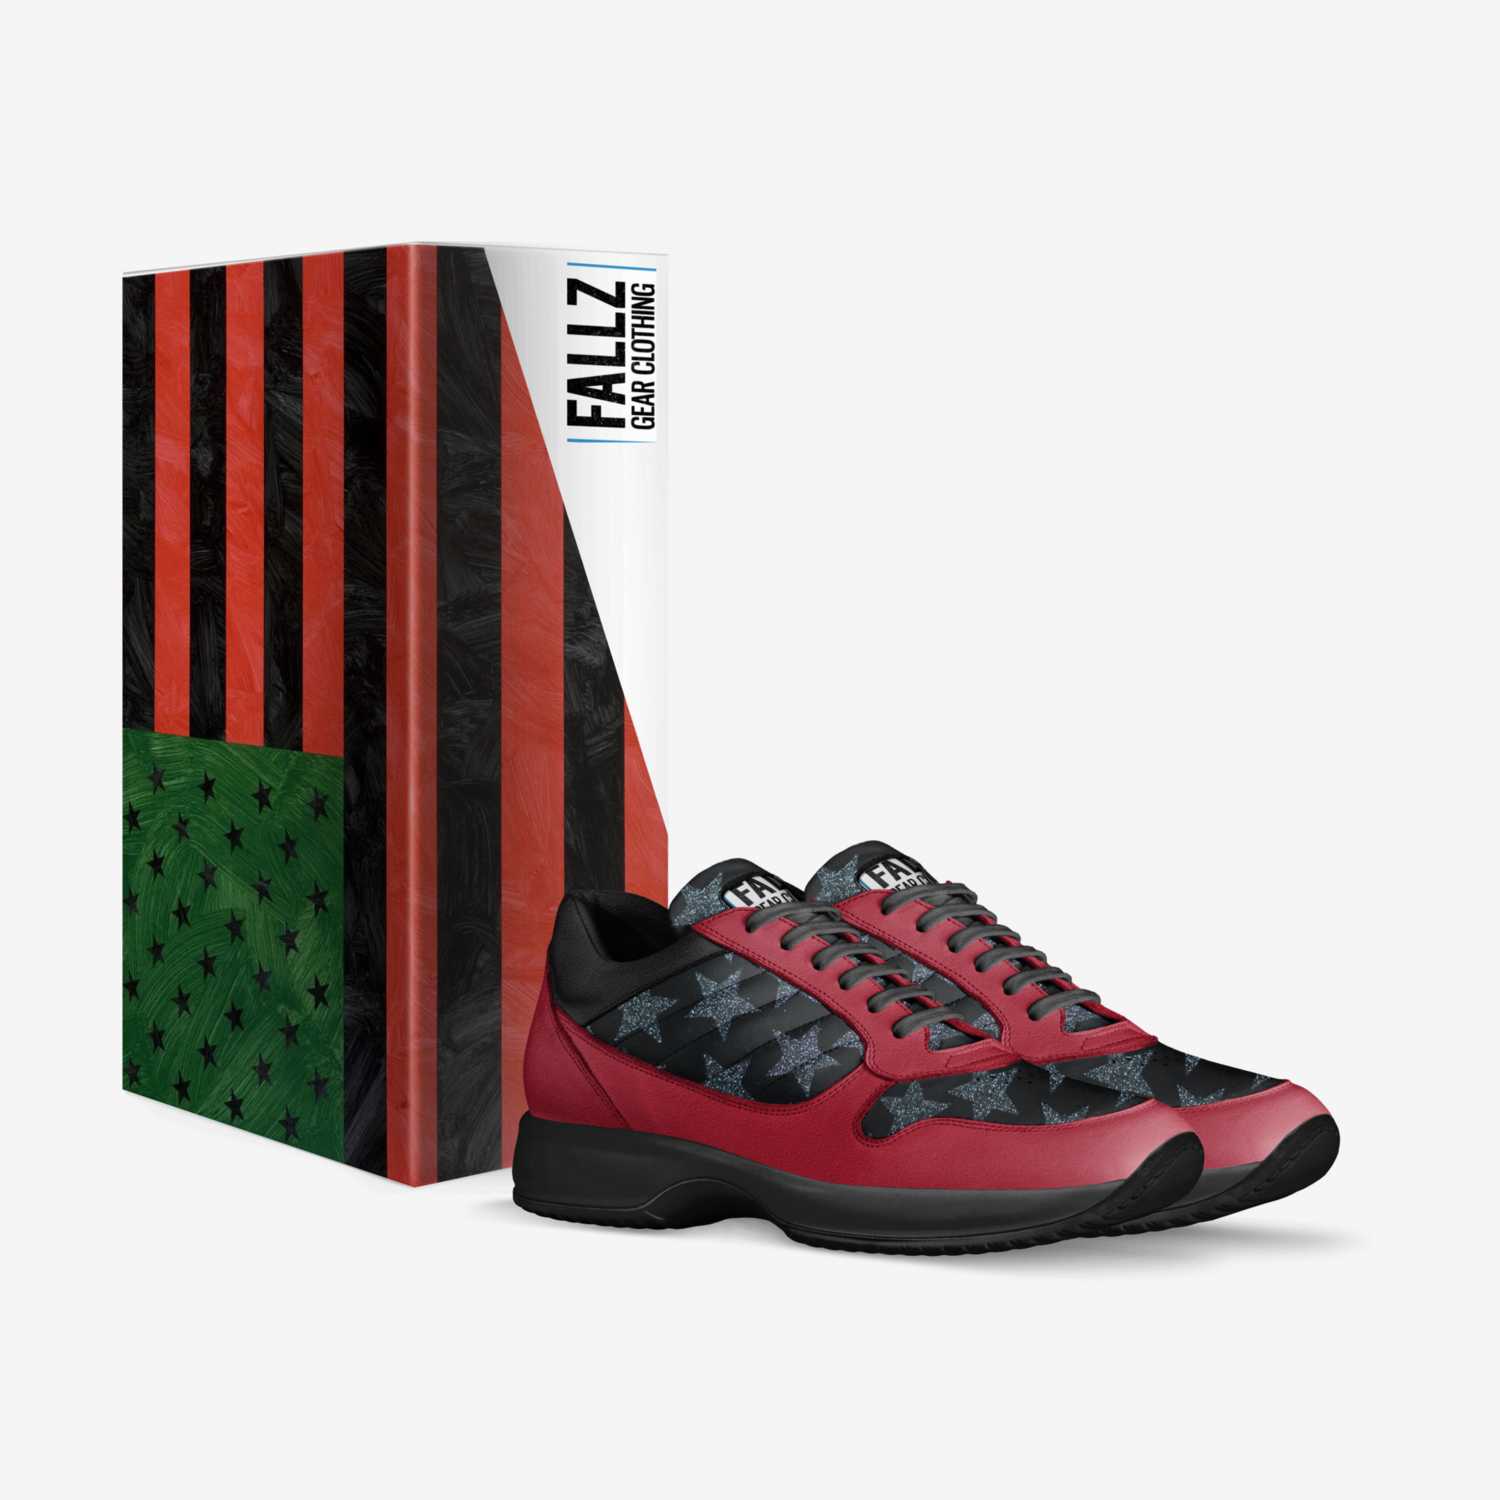 Fallz Gear: Runner custom made in Italy shoes by Fallz Gear | Box view